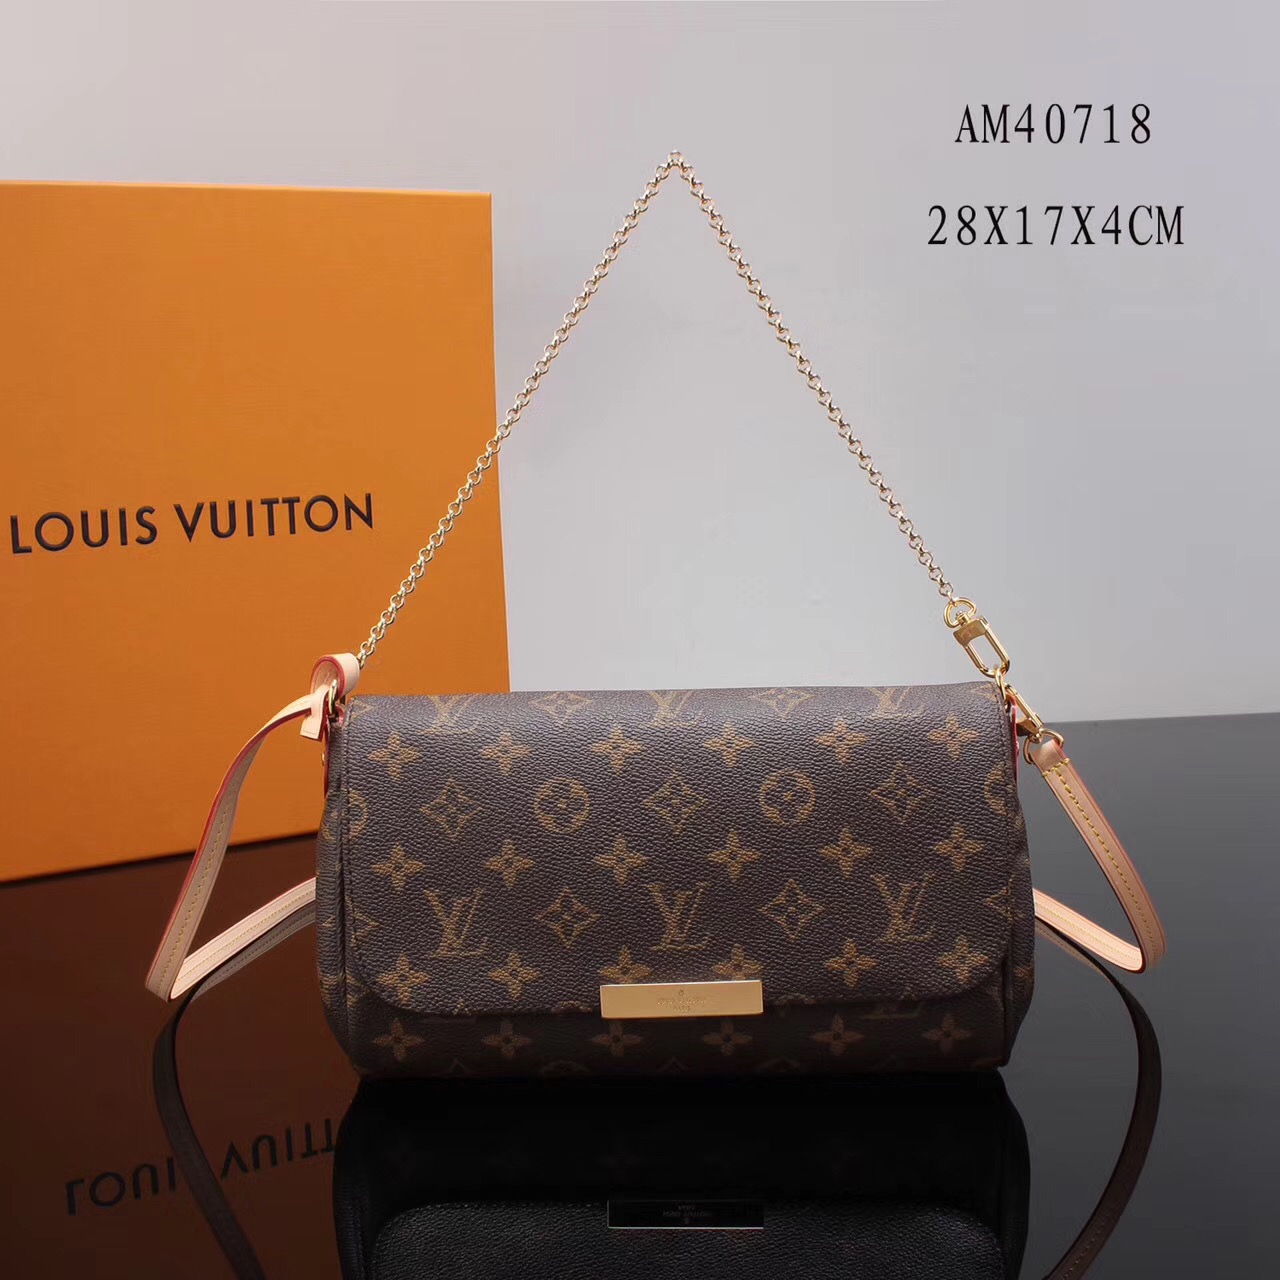 LV Louis Vuitton Monogram AM40718 Shoulder bags Handbags Brown